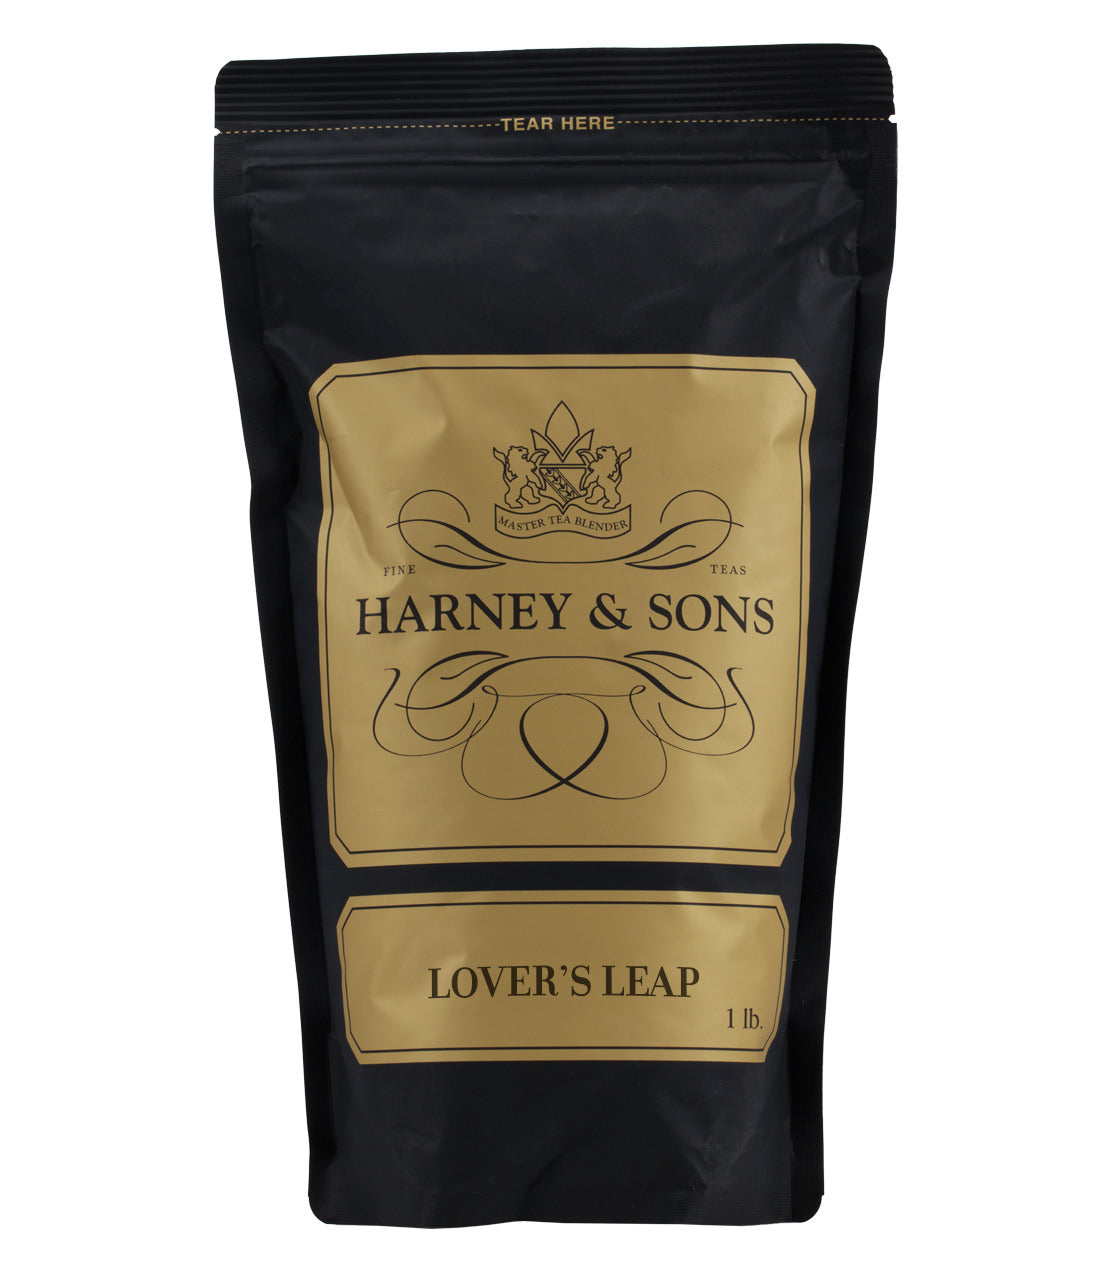 Lover's Leap - Loose 1 lb. Bag - Harney & Sons Fine Teas